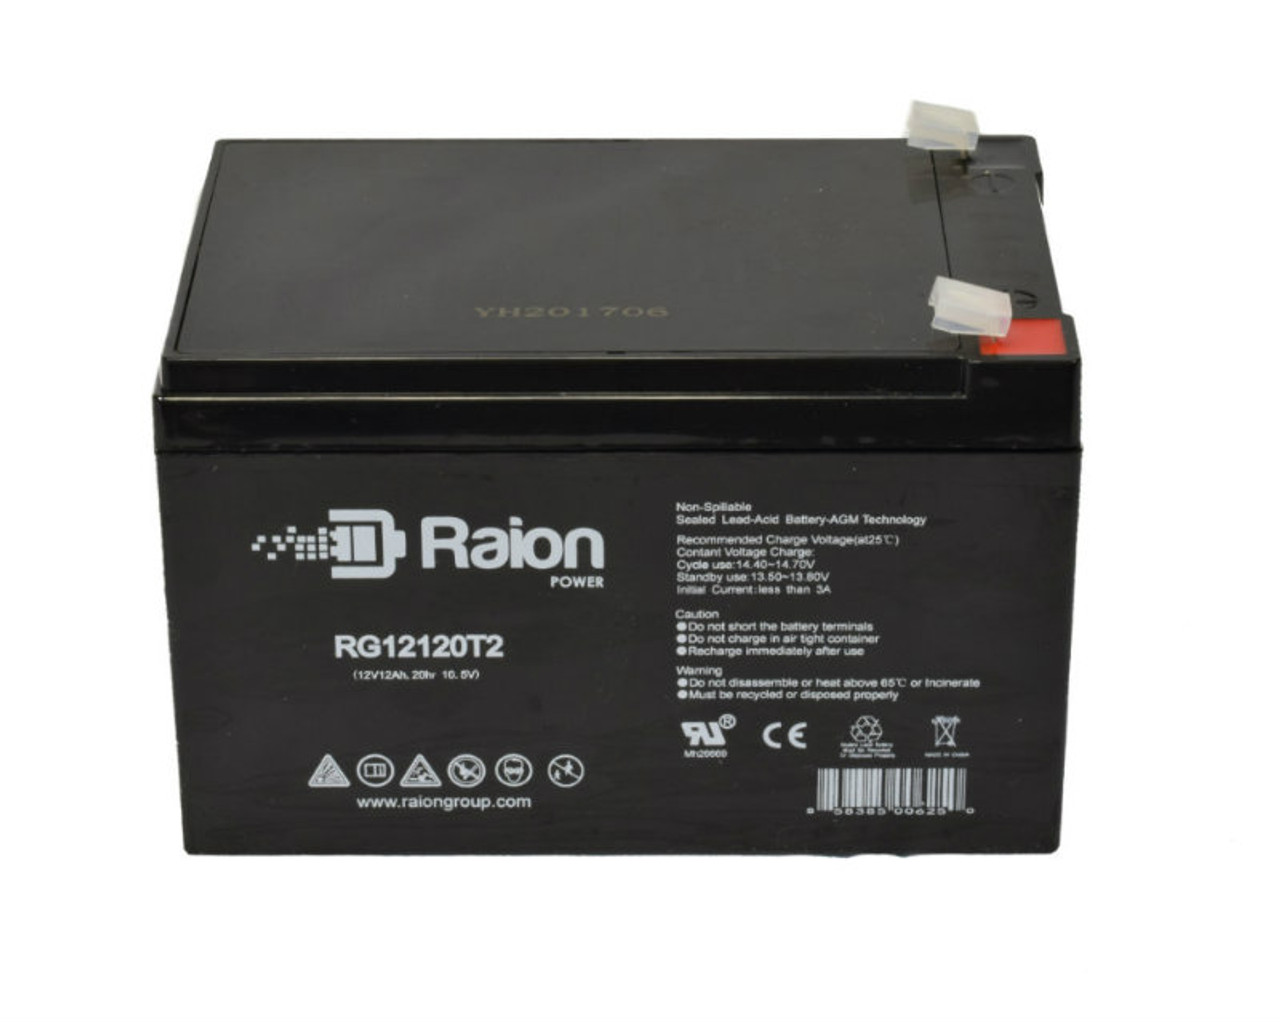 Raion Power RG12120T2 SLA Battery for PBQ C 12-12